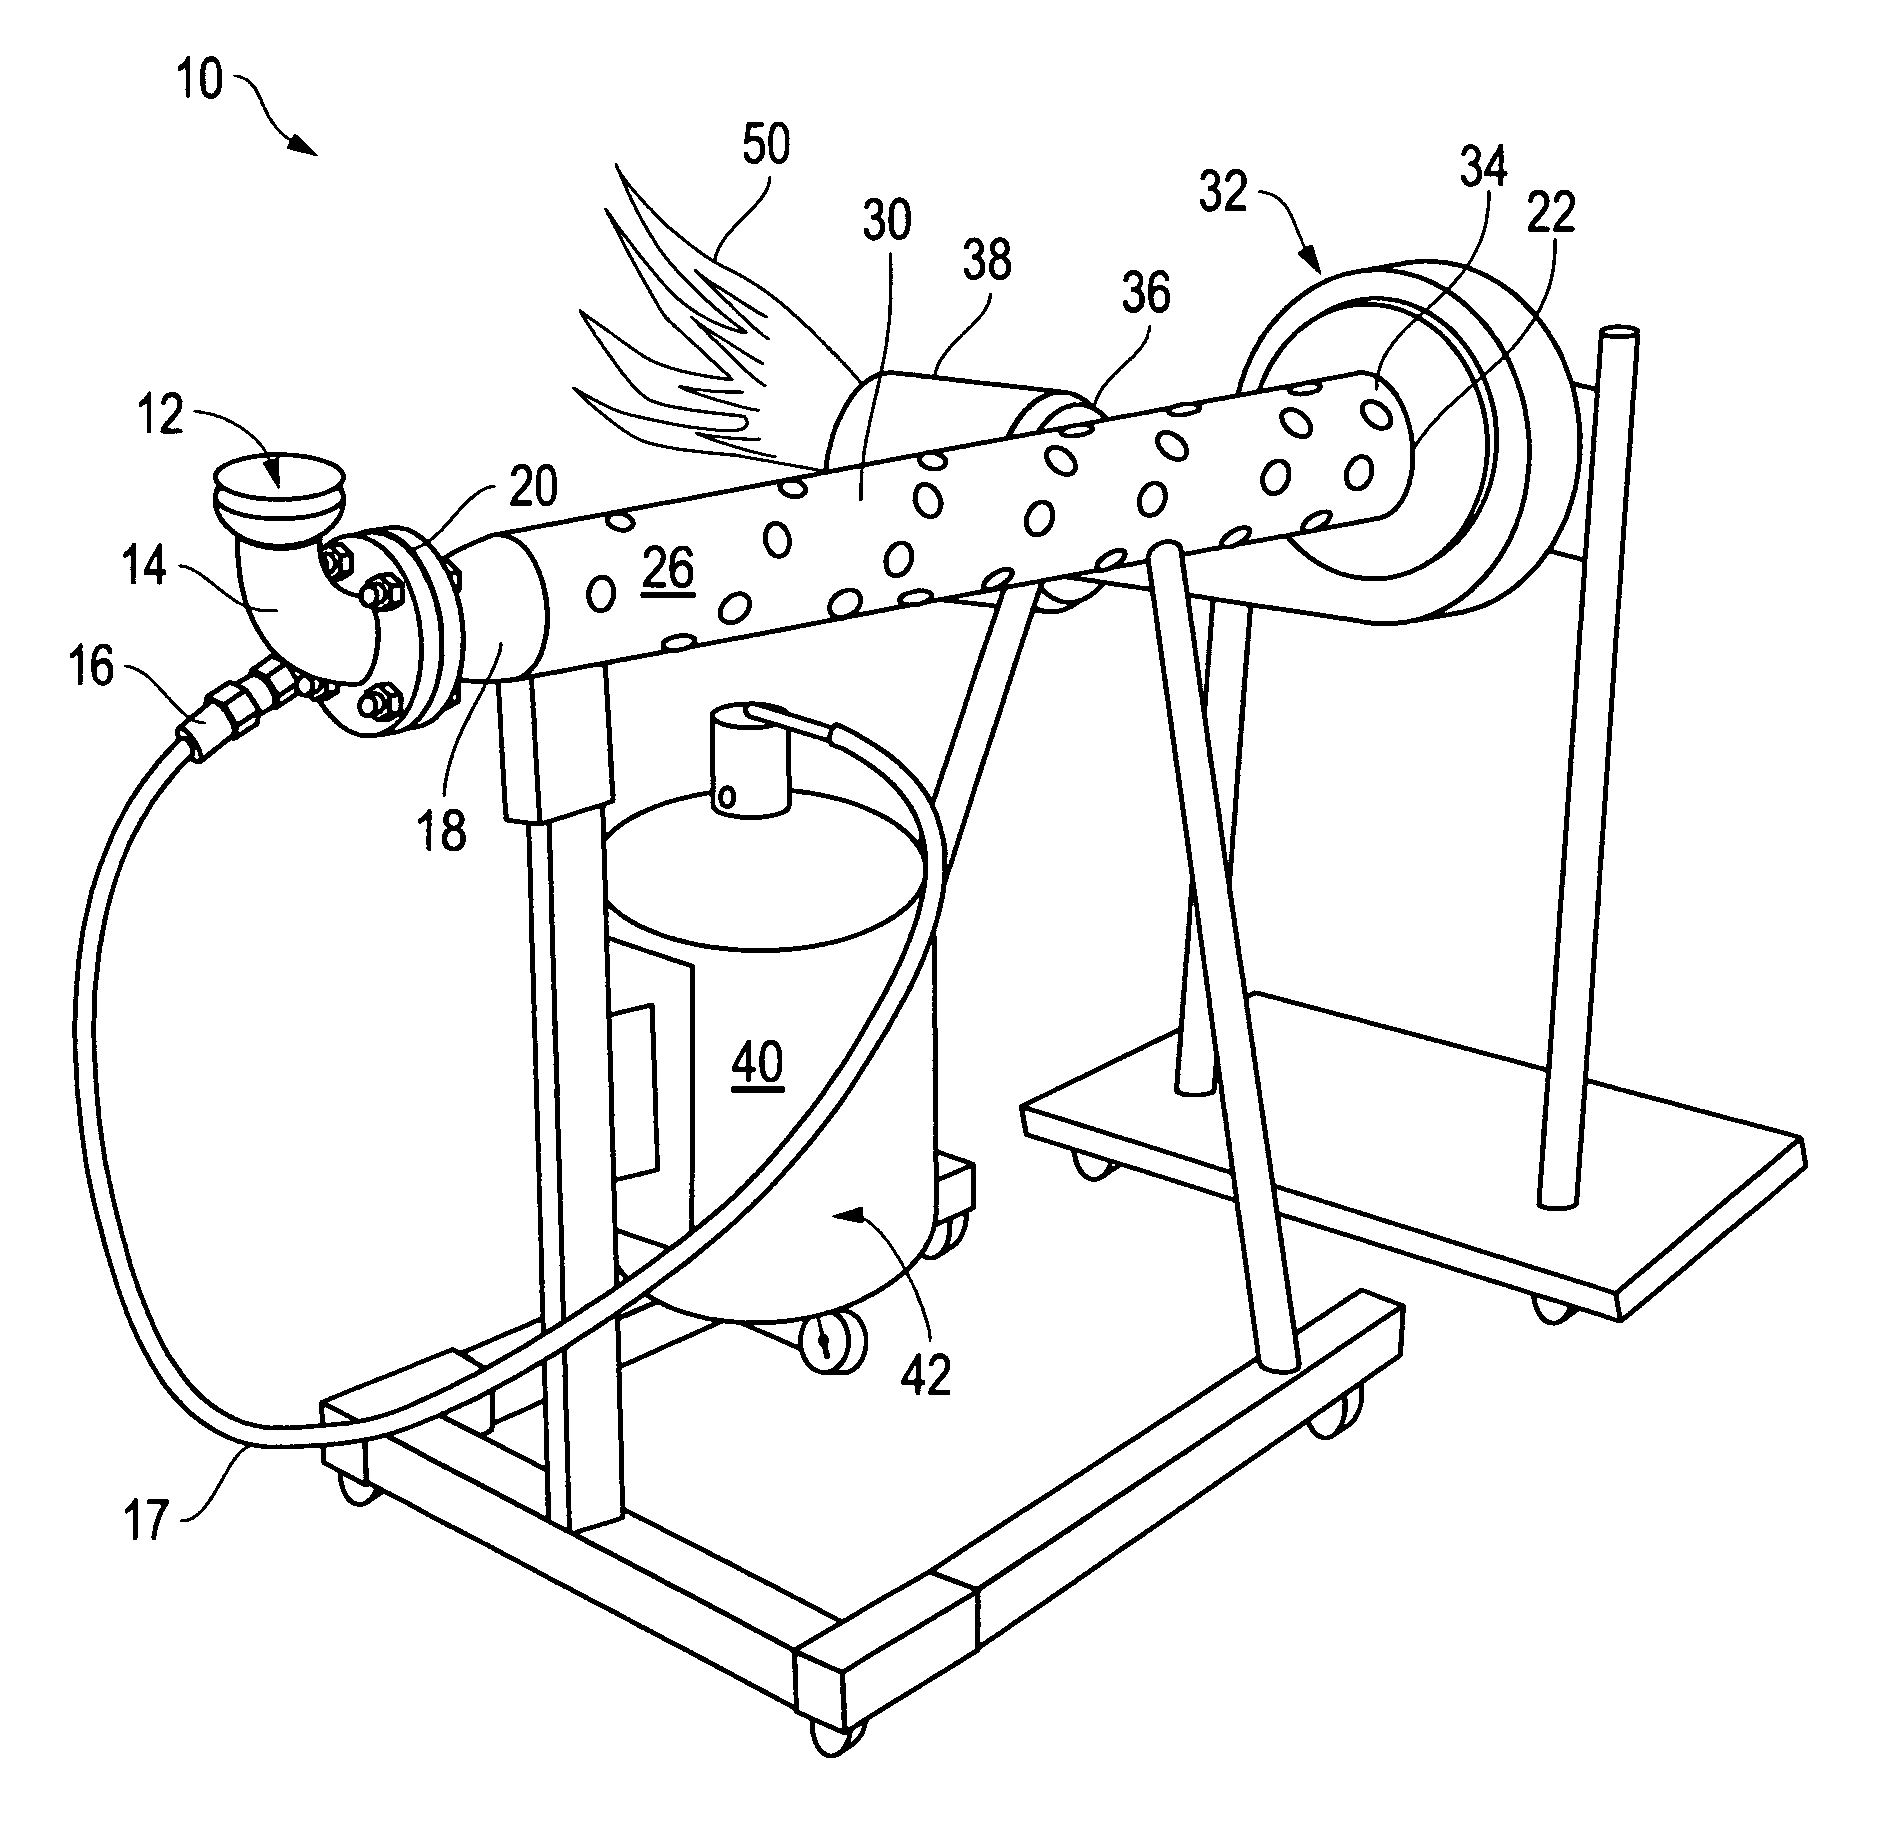 High velocity burner apparatus and method